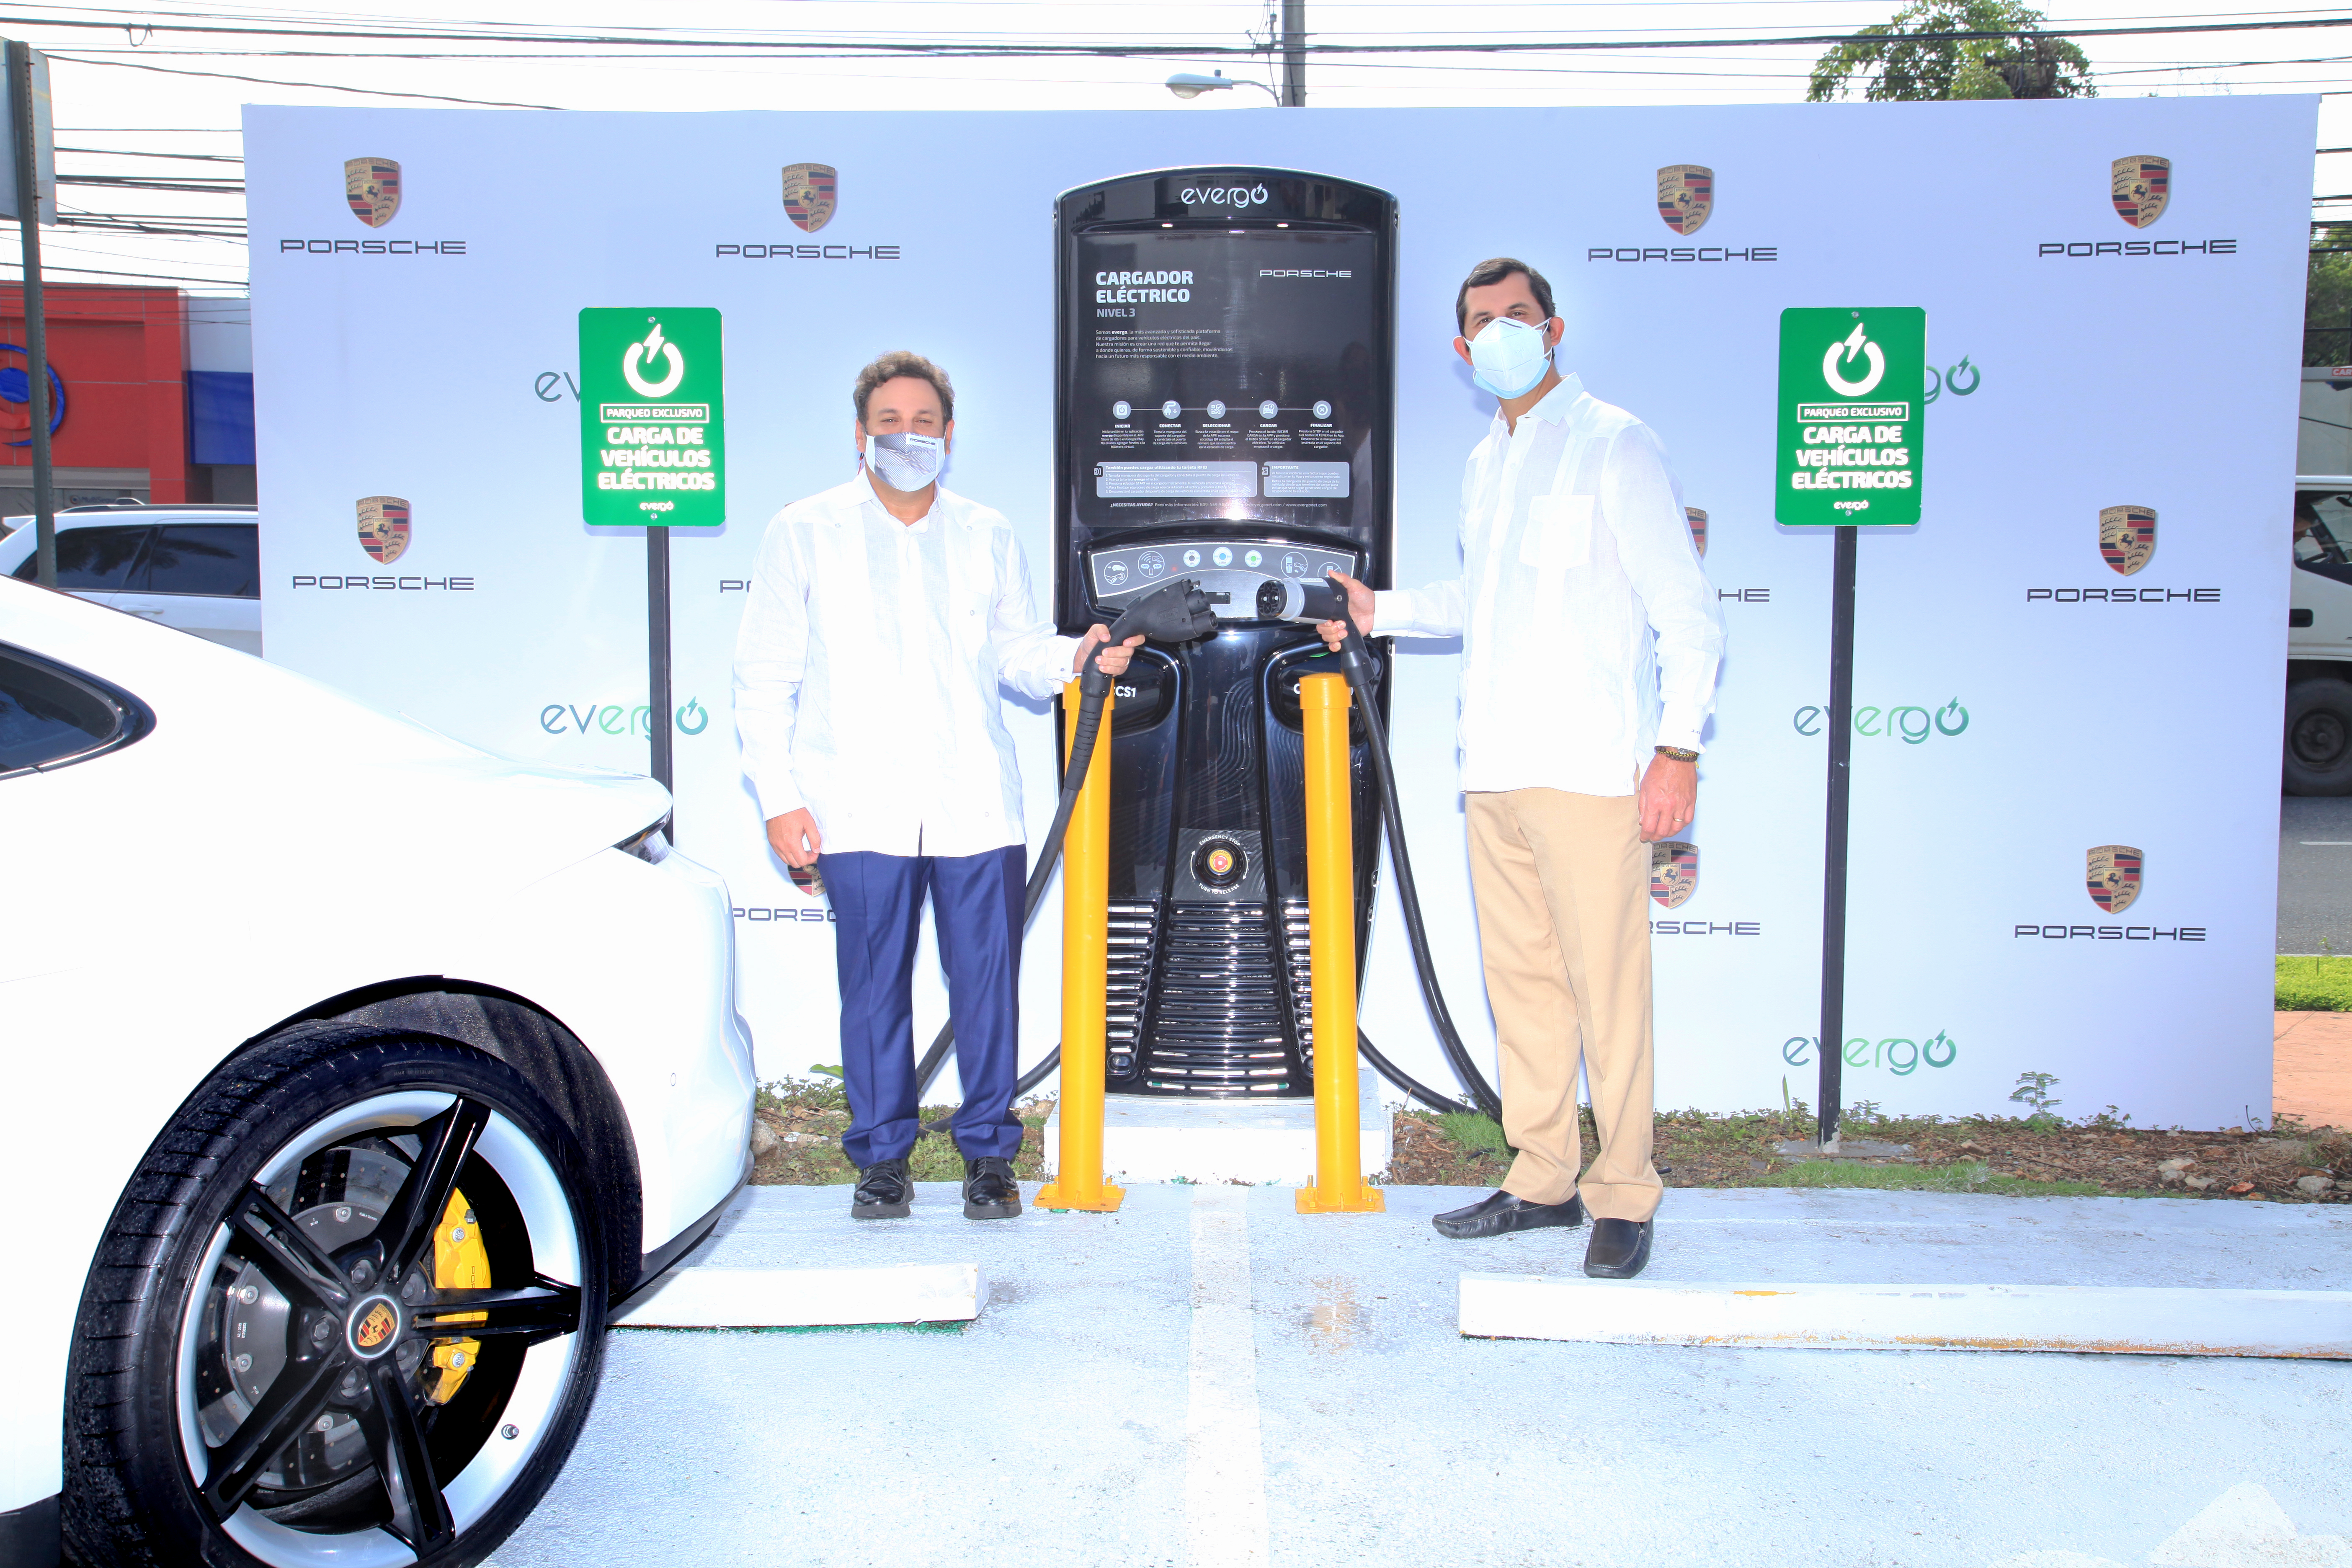 Porsche Center Santo Domingo se une a red de estaciones de carga eléctrica Evergo